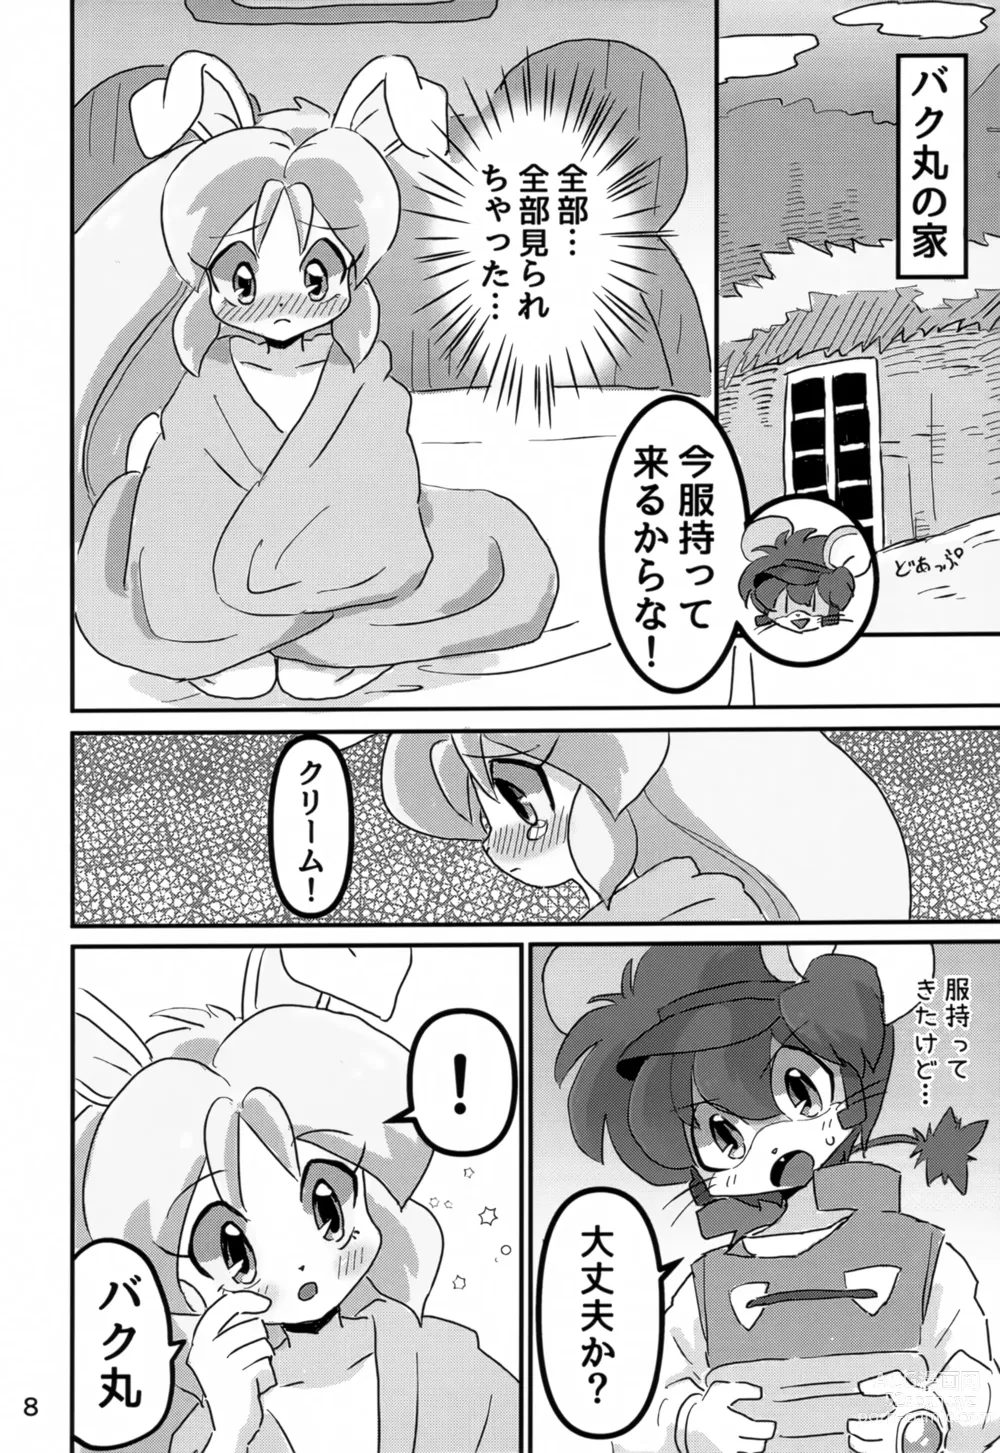 Page 7 of doujinshi Juunishi Lovers